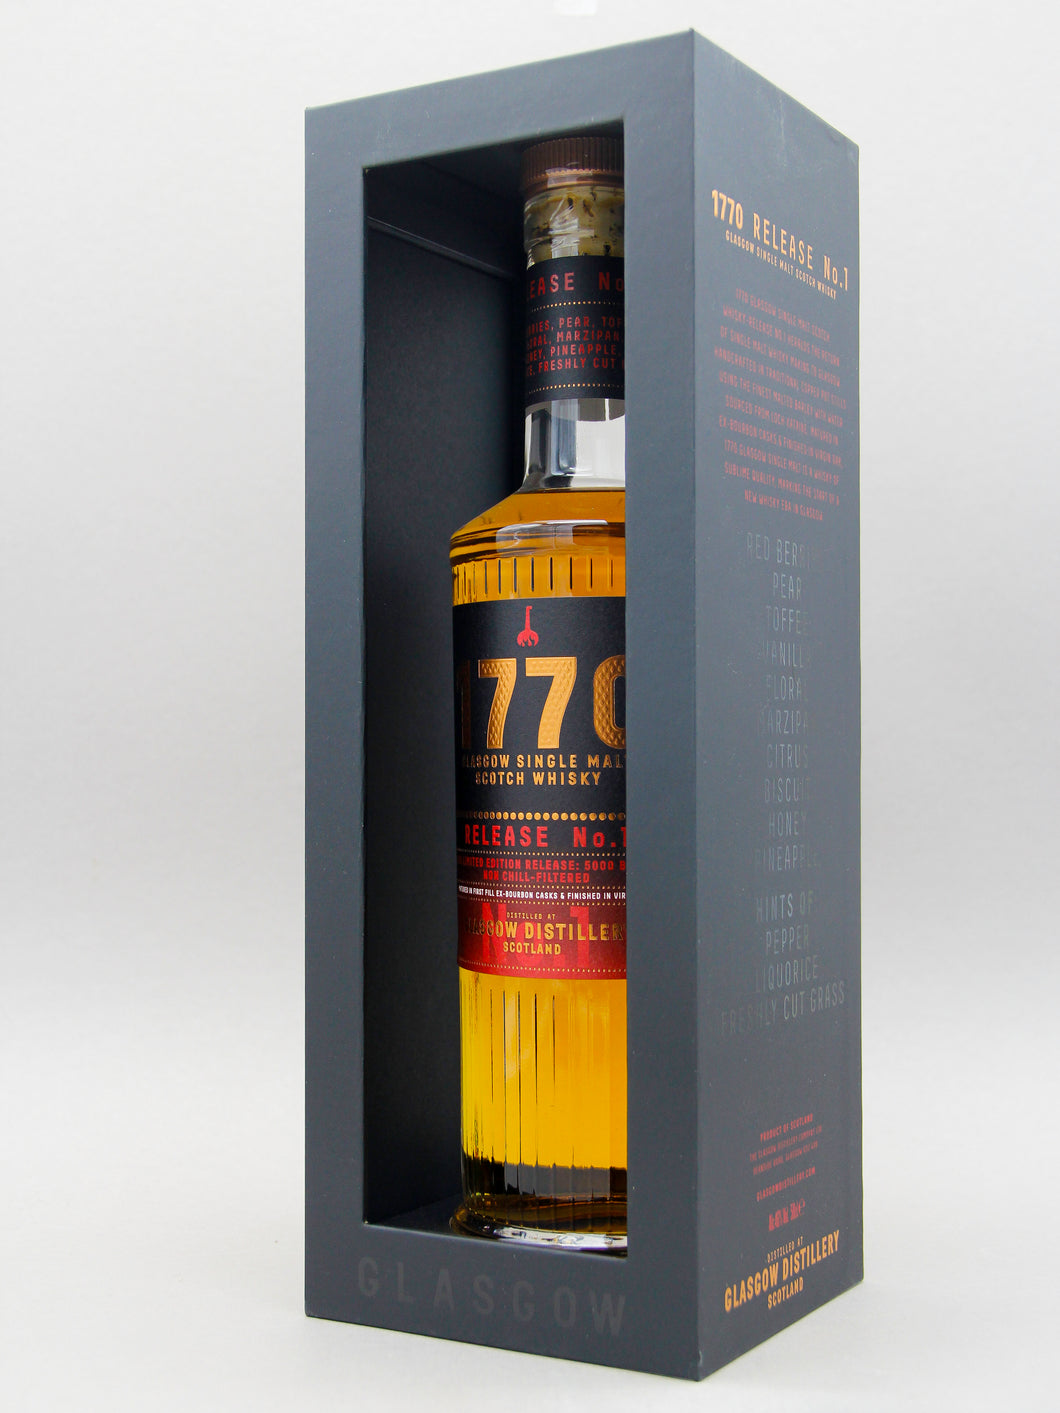 Glasgow Distillery, 1770 Release No. 1, Glasgow Single Malt Whisky, Scotland (46%, 50cl)